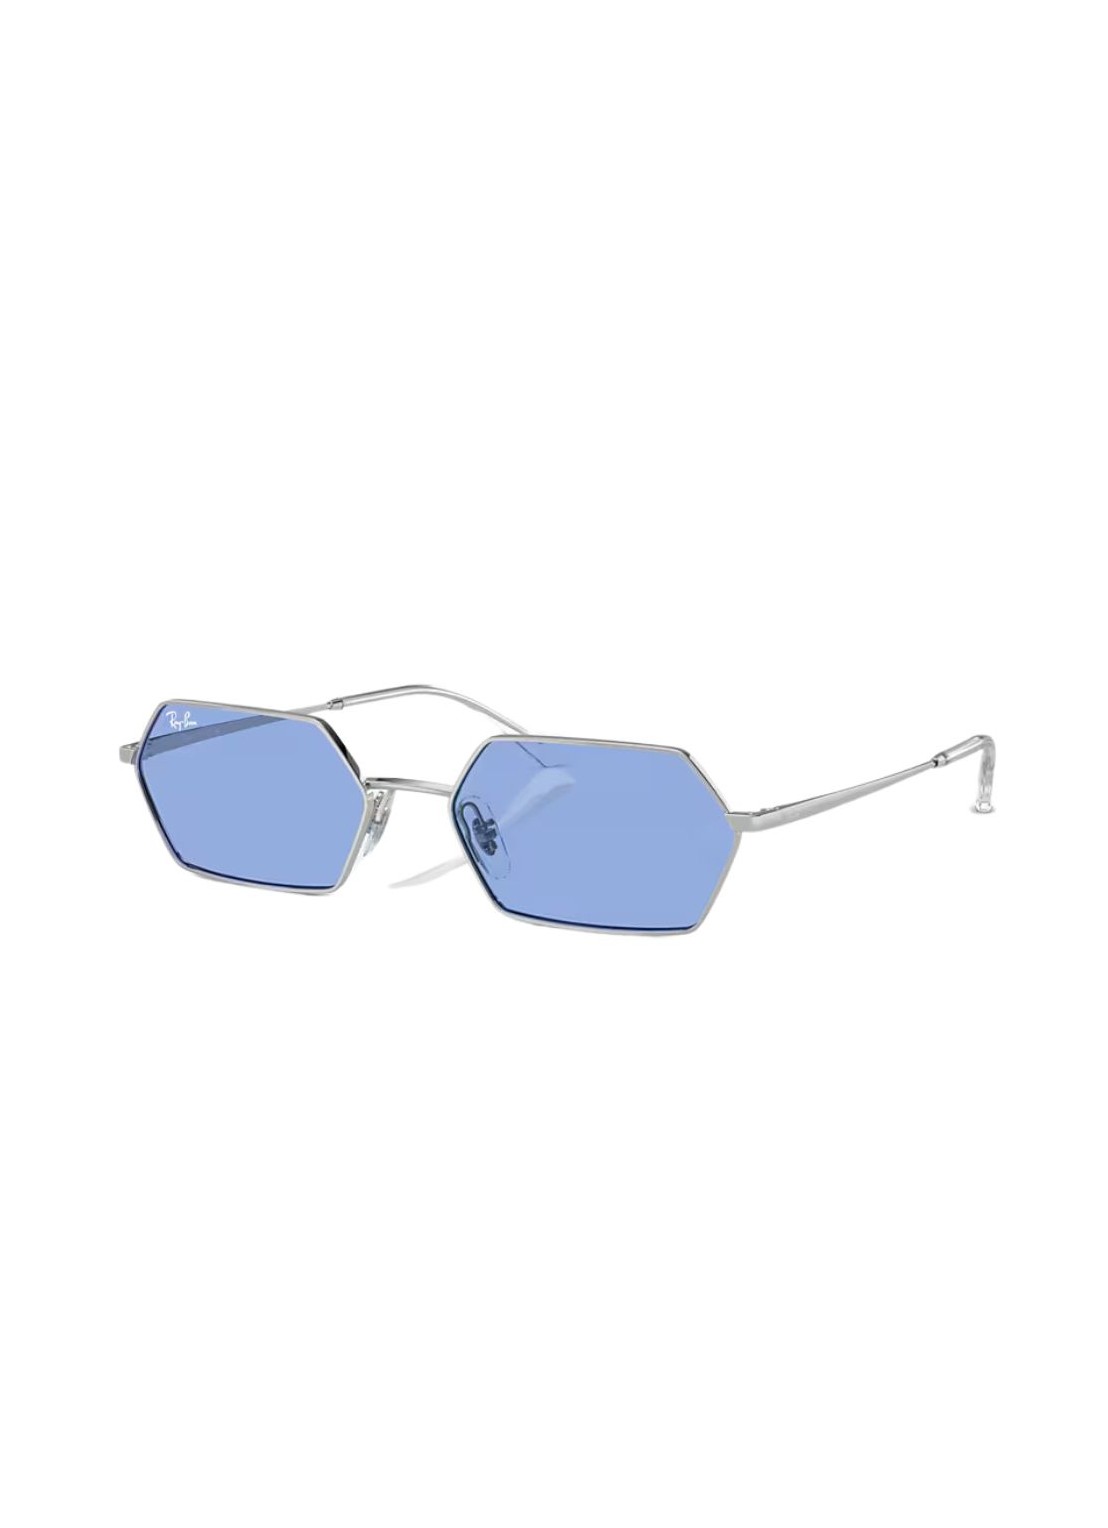 Gafas rayban sunglasses unisex0rb3728 - 0rb3728 003/80 talla transparente
 